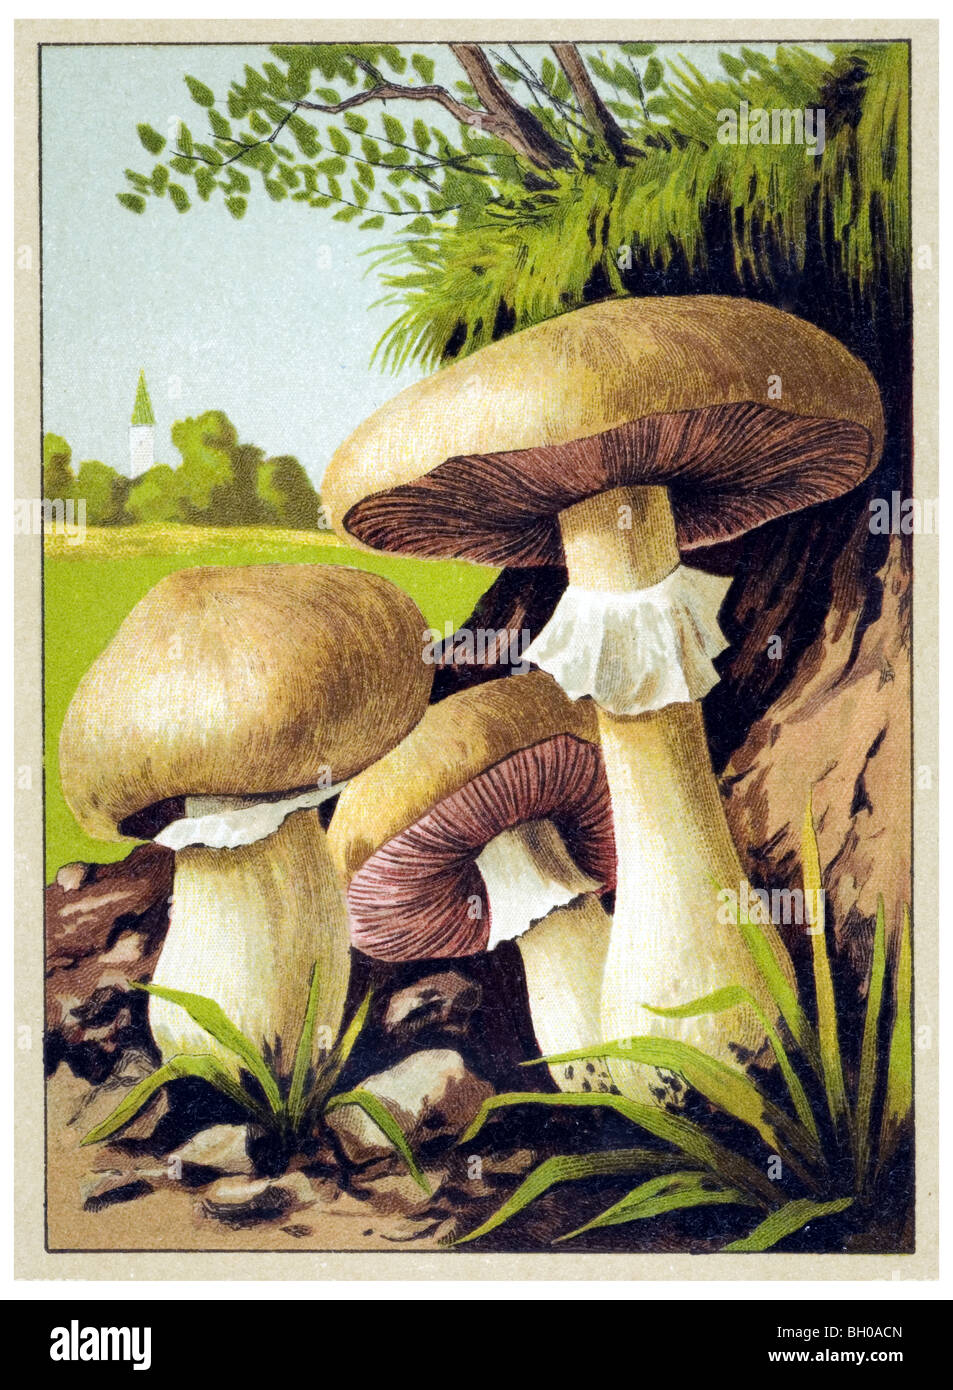 Field mushroom fungus Stock Photo